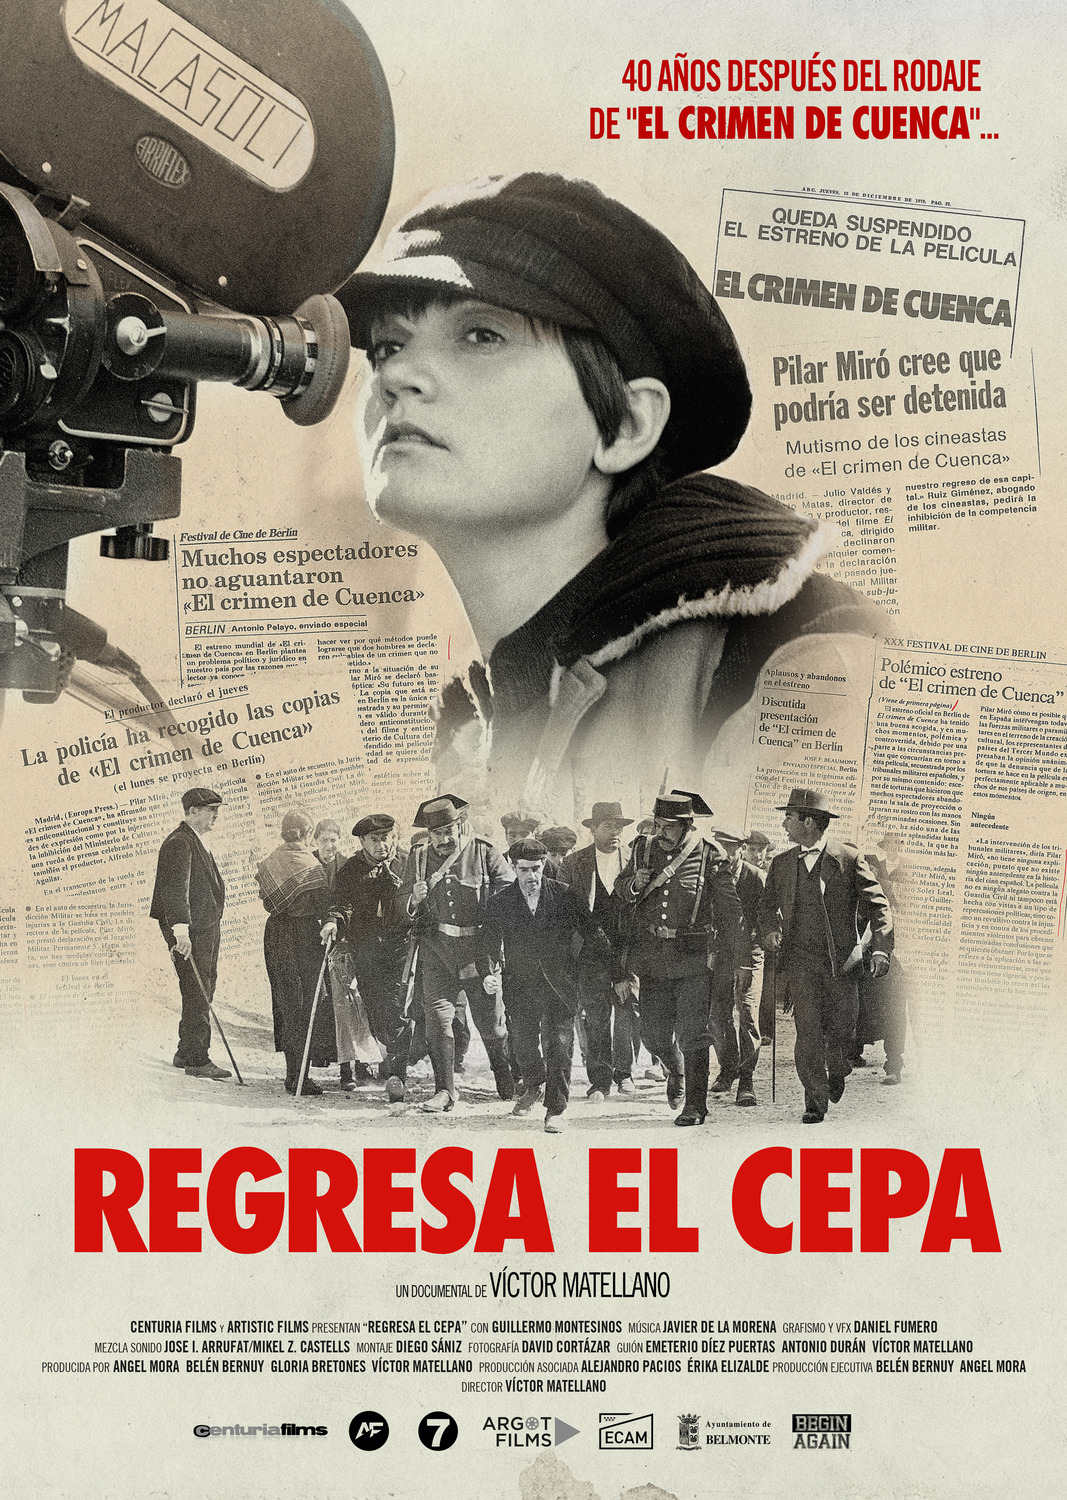 Extra Large Movie Poster Image for Regresa El Cepa 